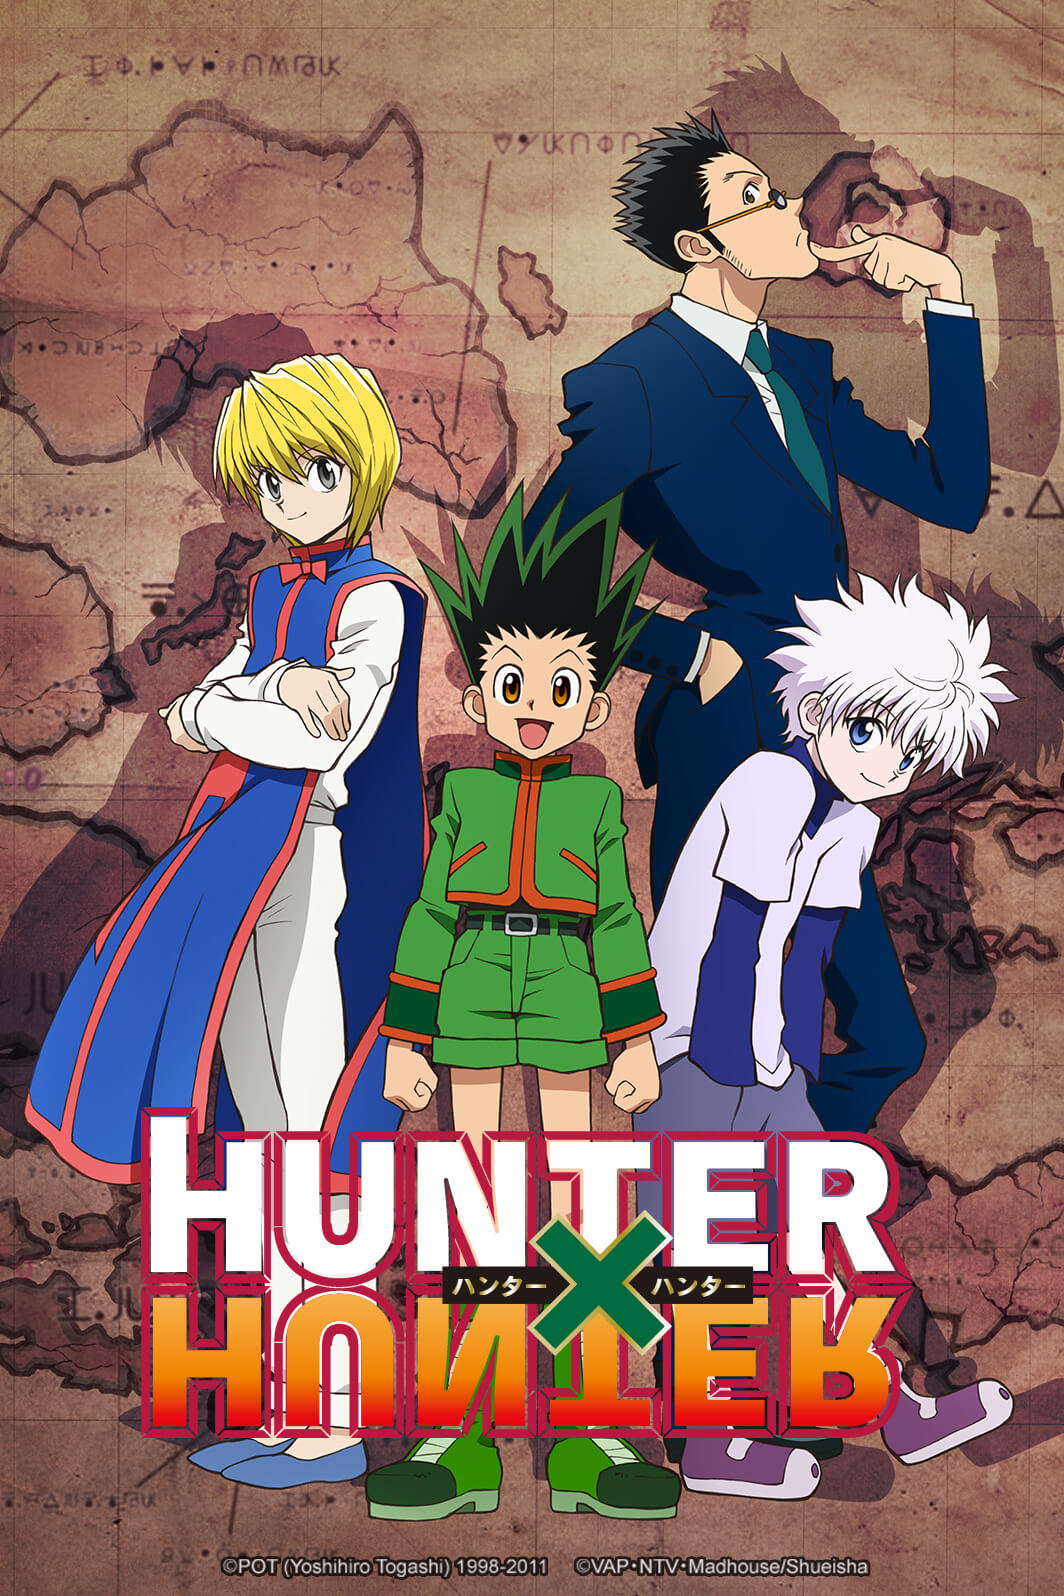 El rincon de Perpi: Mega Anime reseña: Hunter x Hunter (2011)